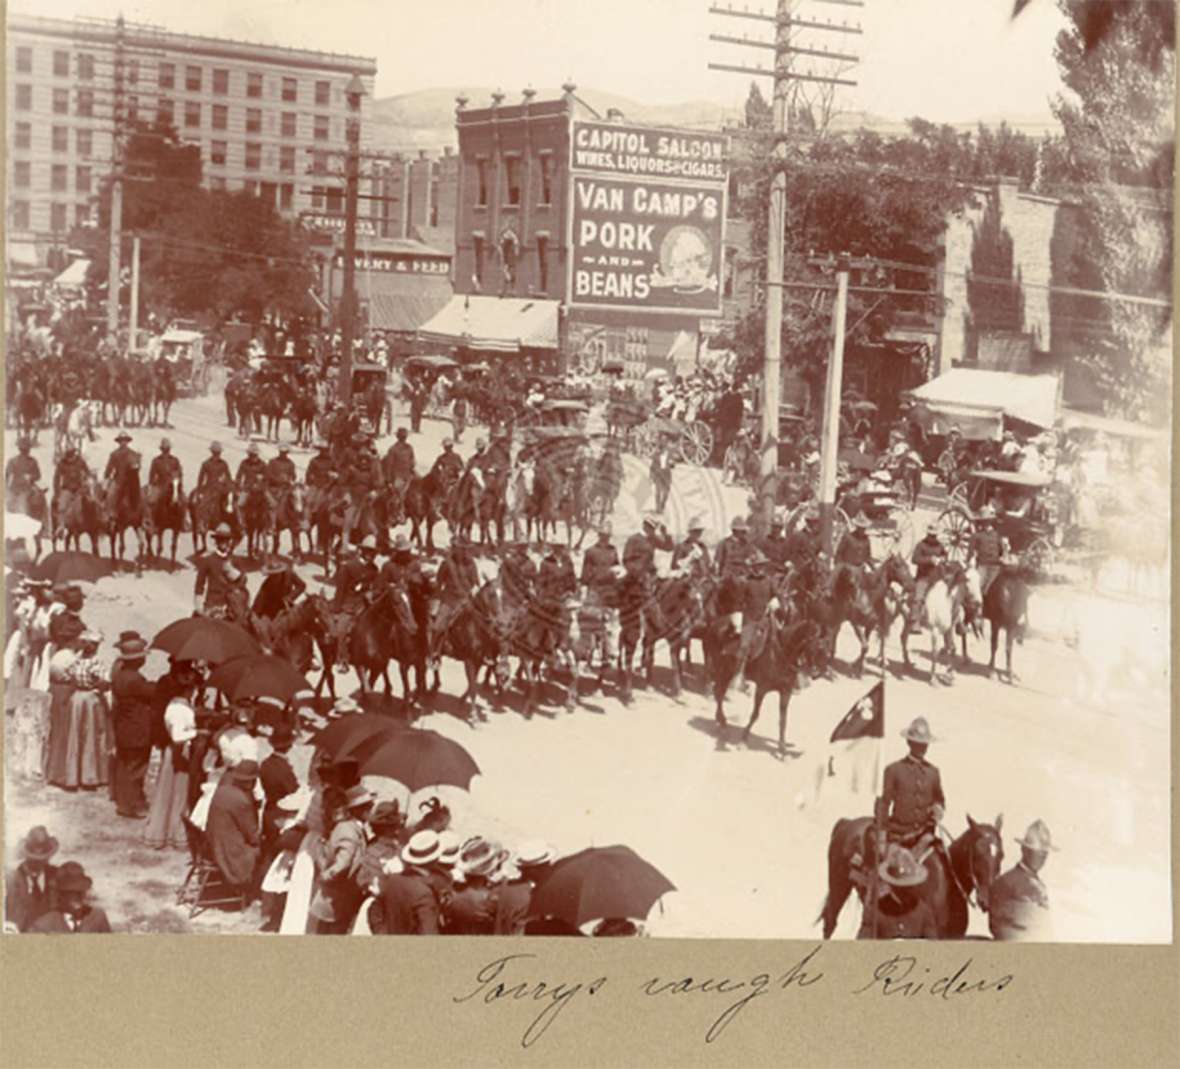 Members of Torrey’s Rough Riders on parade in Salt Lake City. These may be the Utah units of the Second Volunteer Cavalry that returned to Salt Lake in August 1898. Marriott Library, University of Utah.